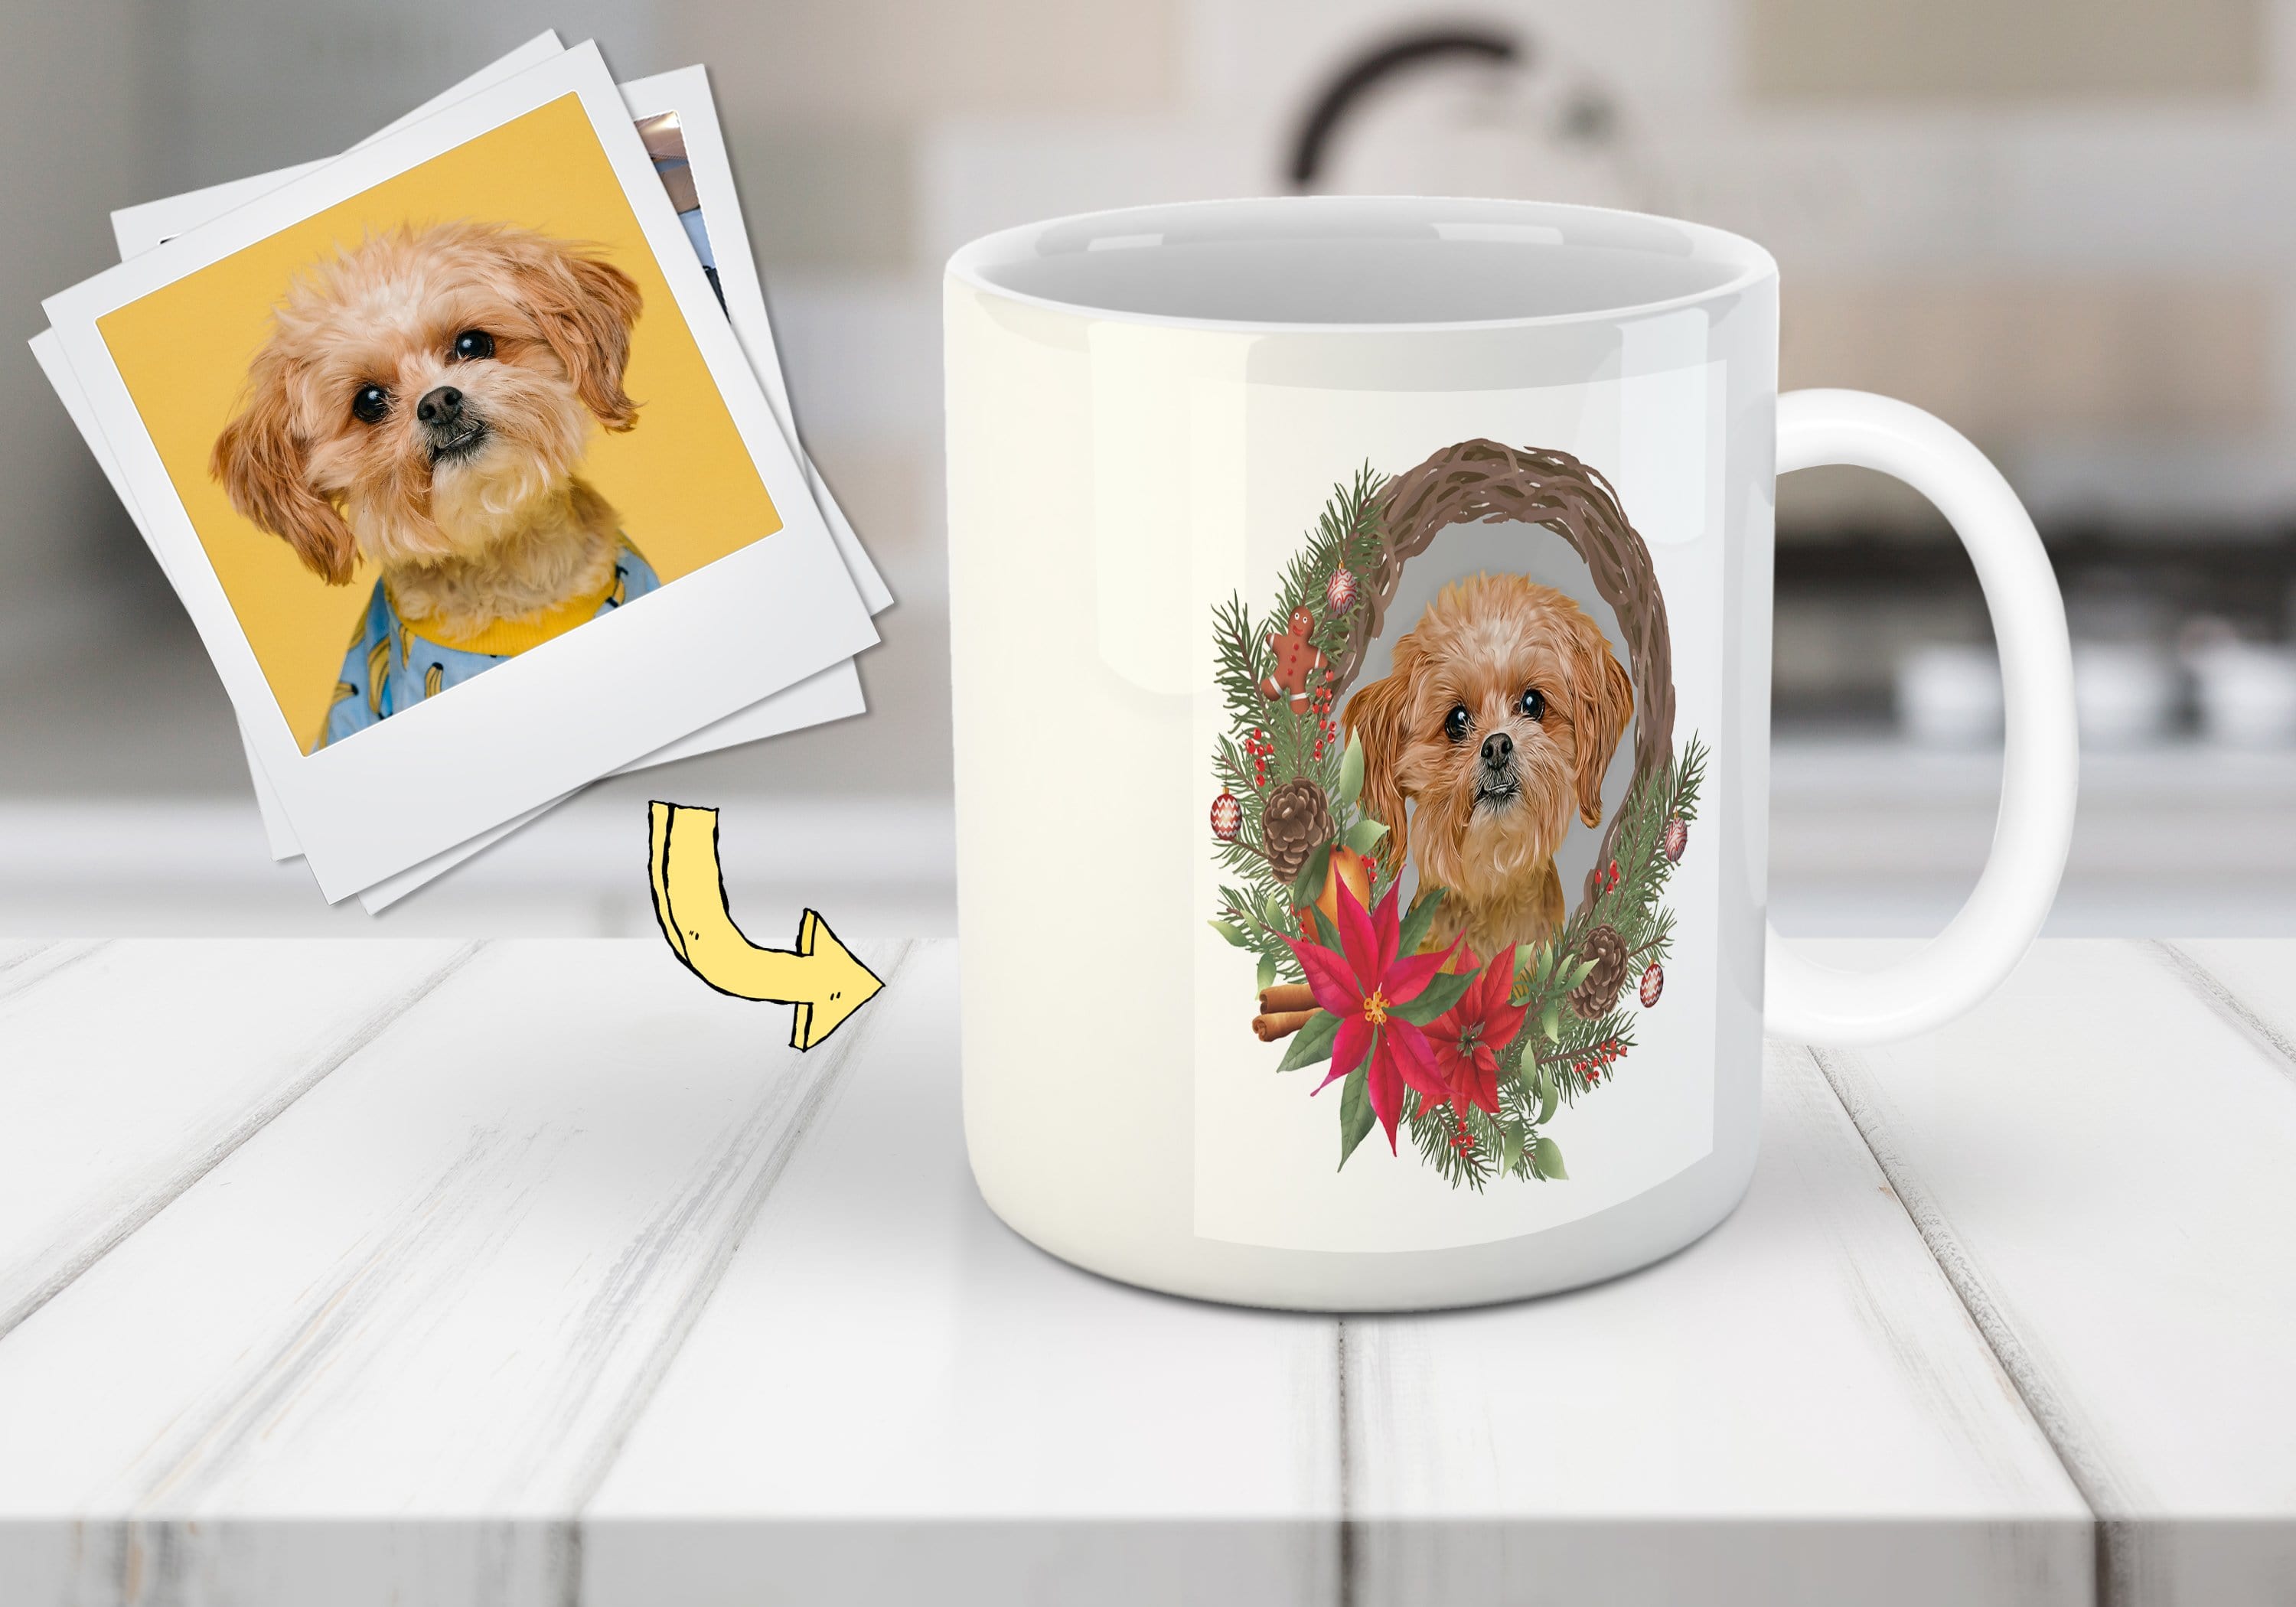 Personalized Christmas Wreath Pet Mug